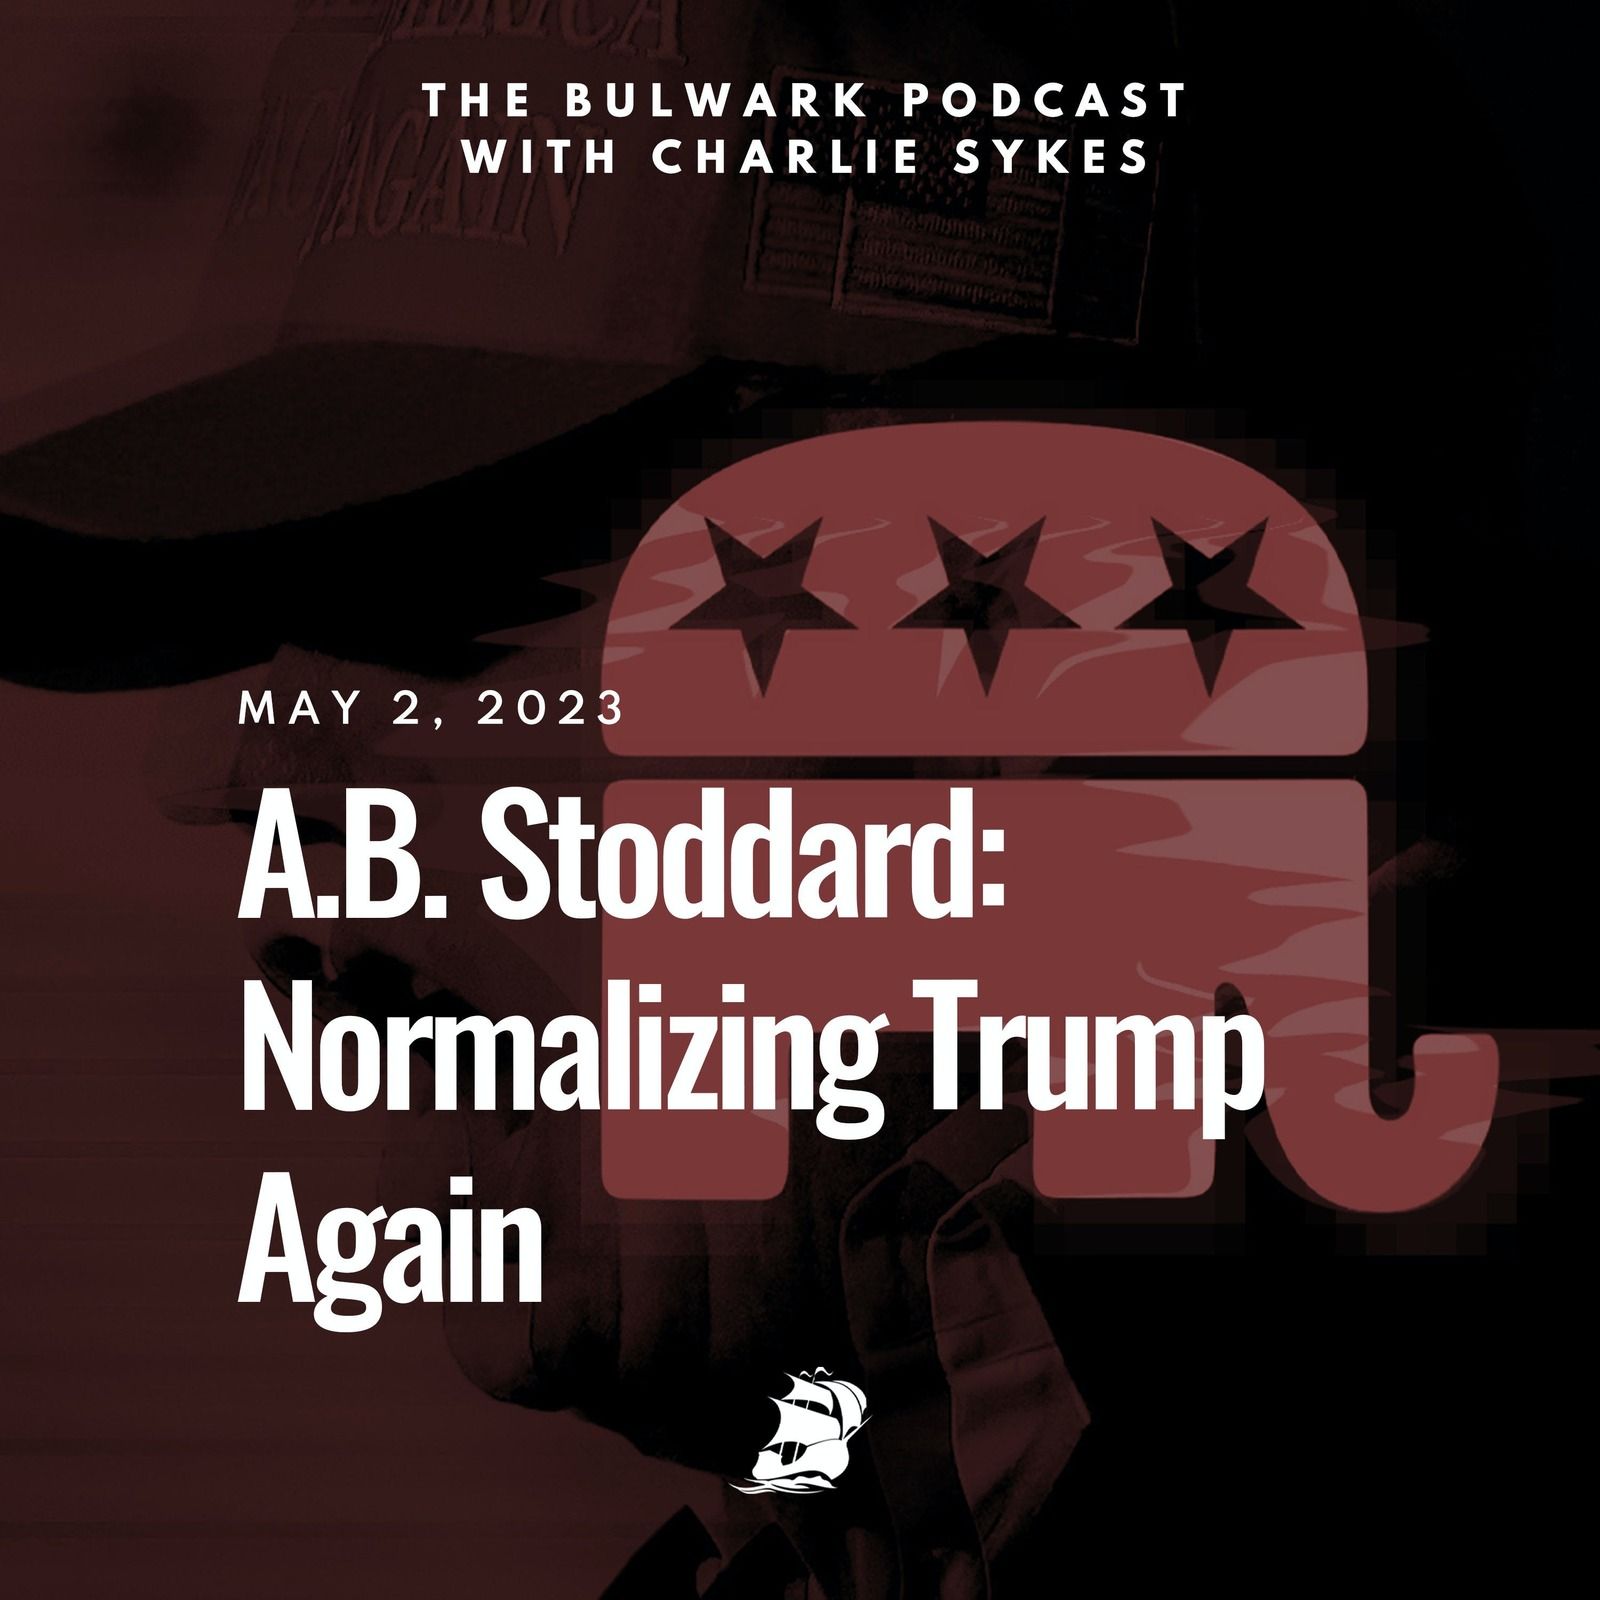 A.B. Stoddard: Normalizing Trump Again